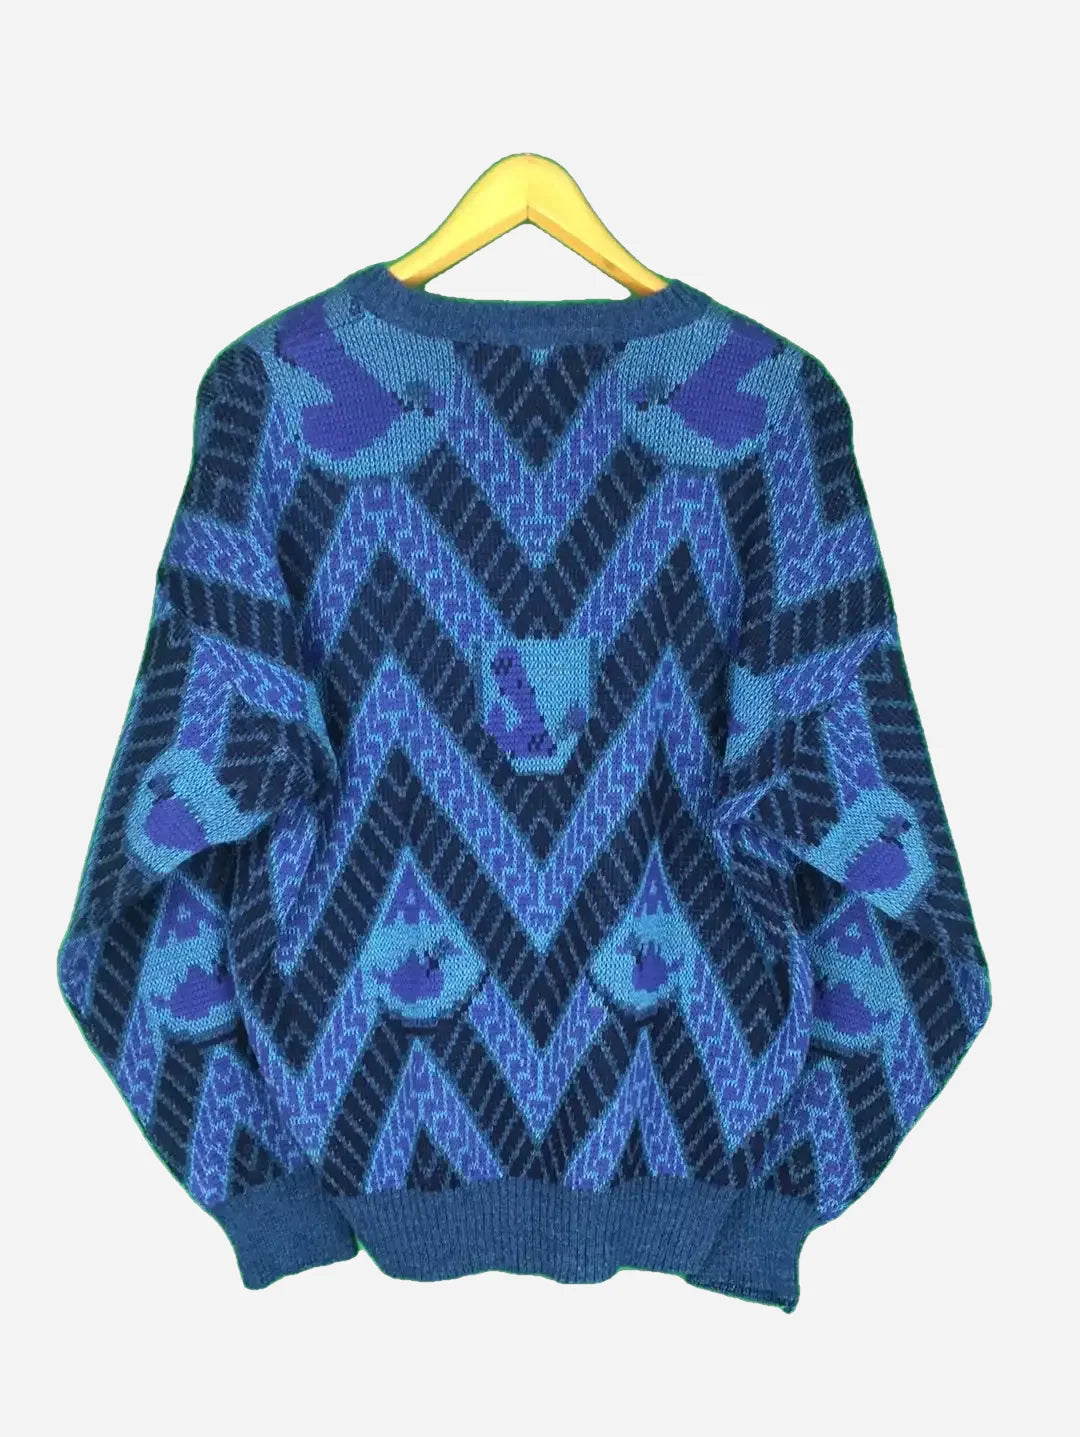 Saddle Club Sweater (M)